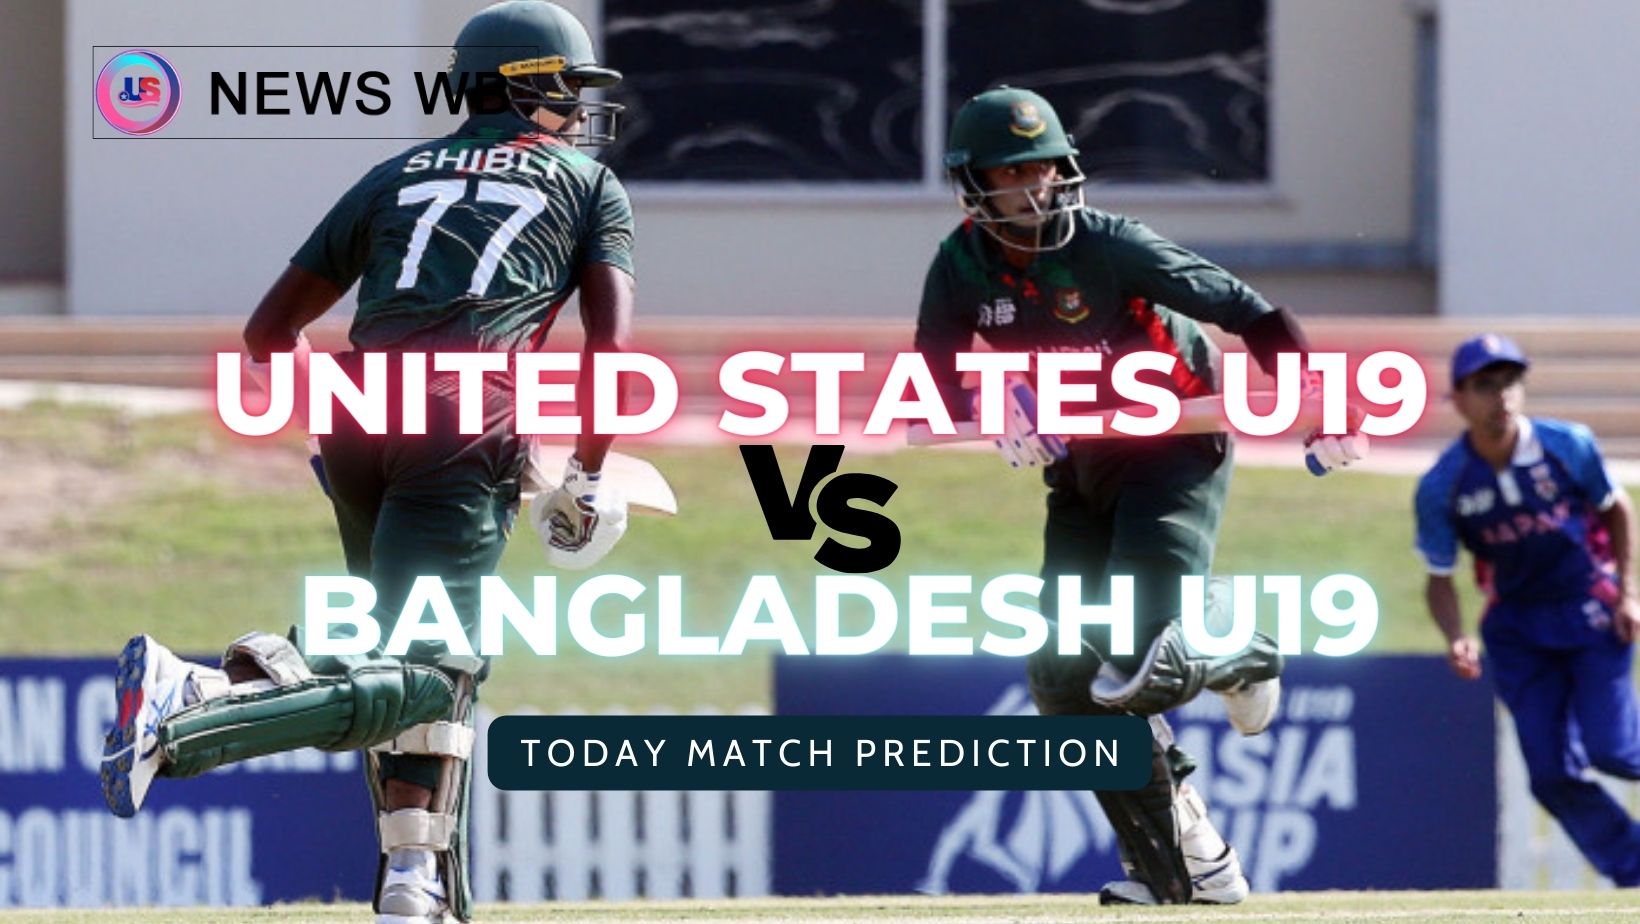 Today Match Prediction: USA U19 vs BAN U19 Dream11 Team, United States U19 vs Bangladesh U19 17th Match, Group A, Who Will Win?